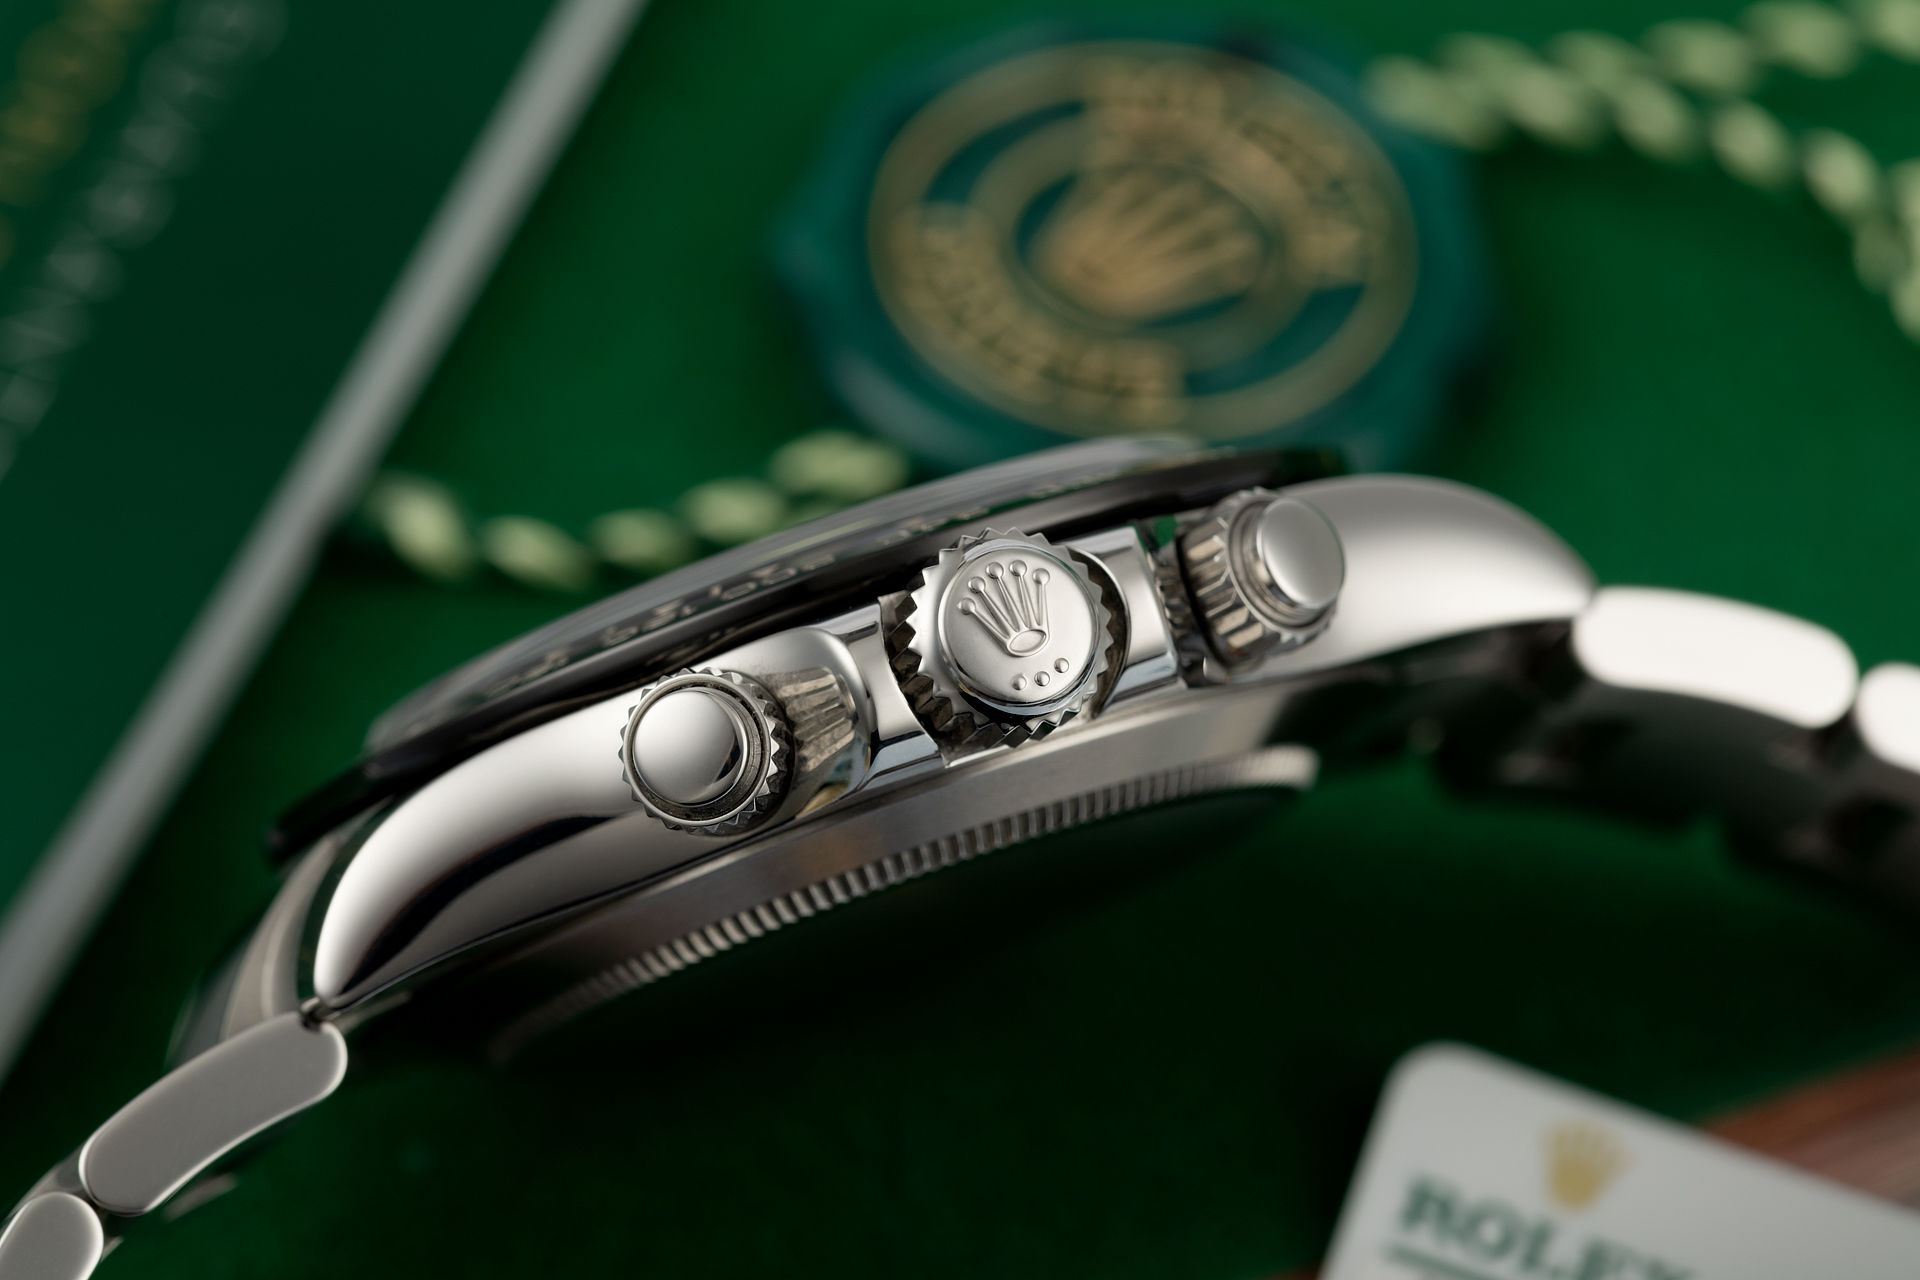 ref 116500LN | Cerachrom Bezel '5 Year Warranty' | Rolex Cosmograph Daytona